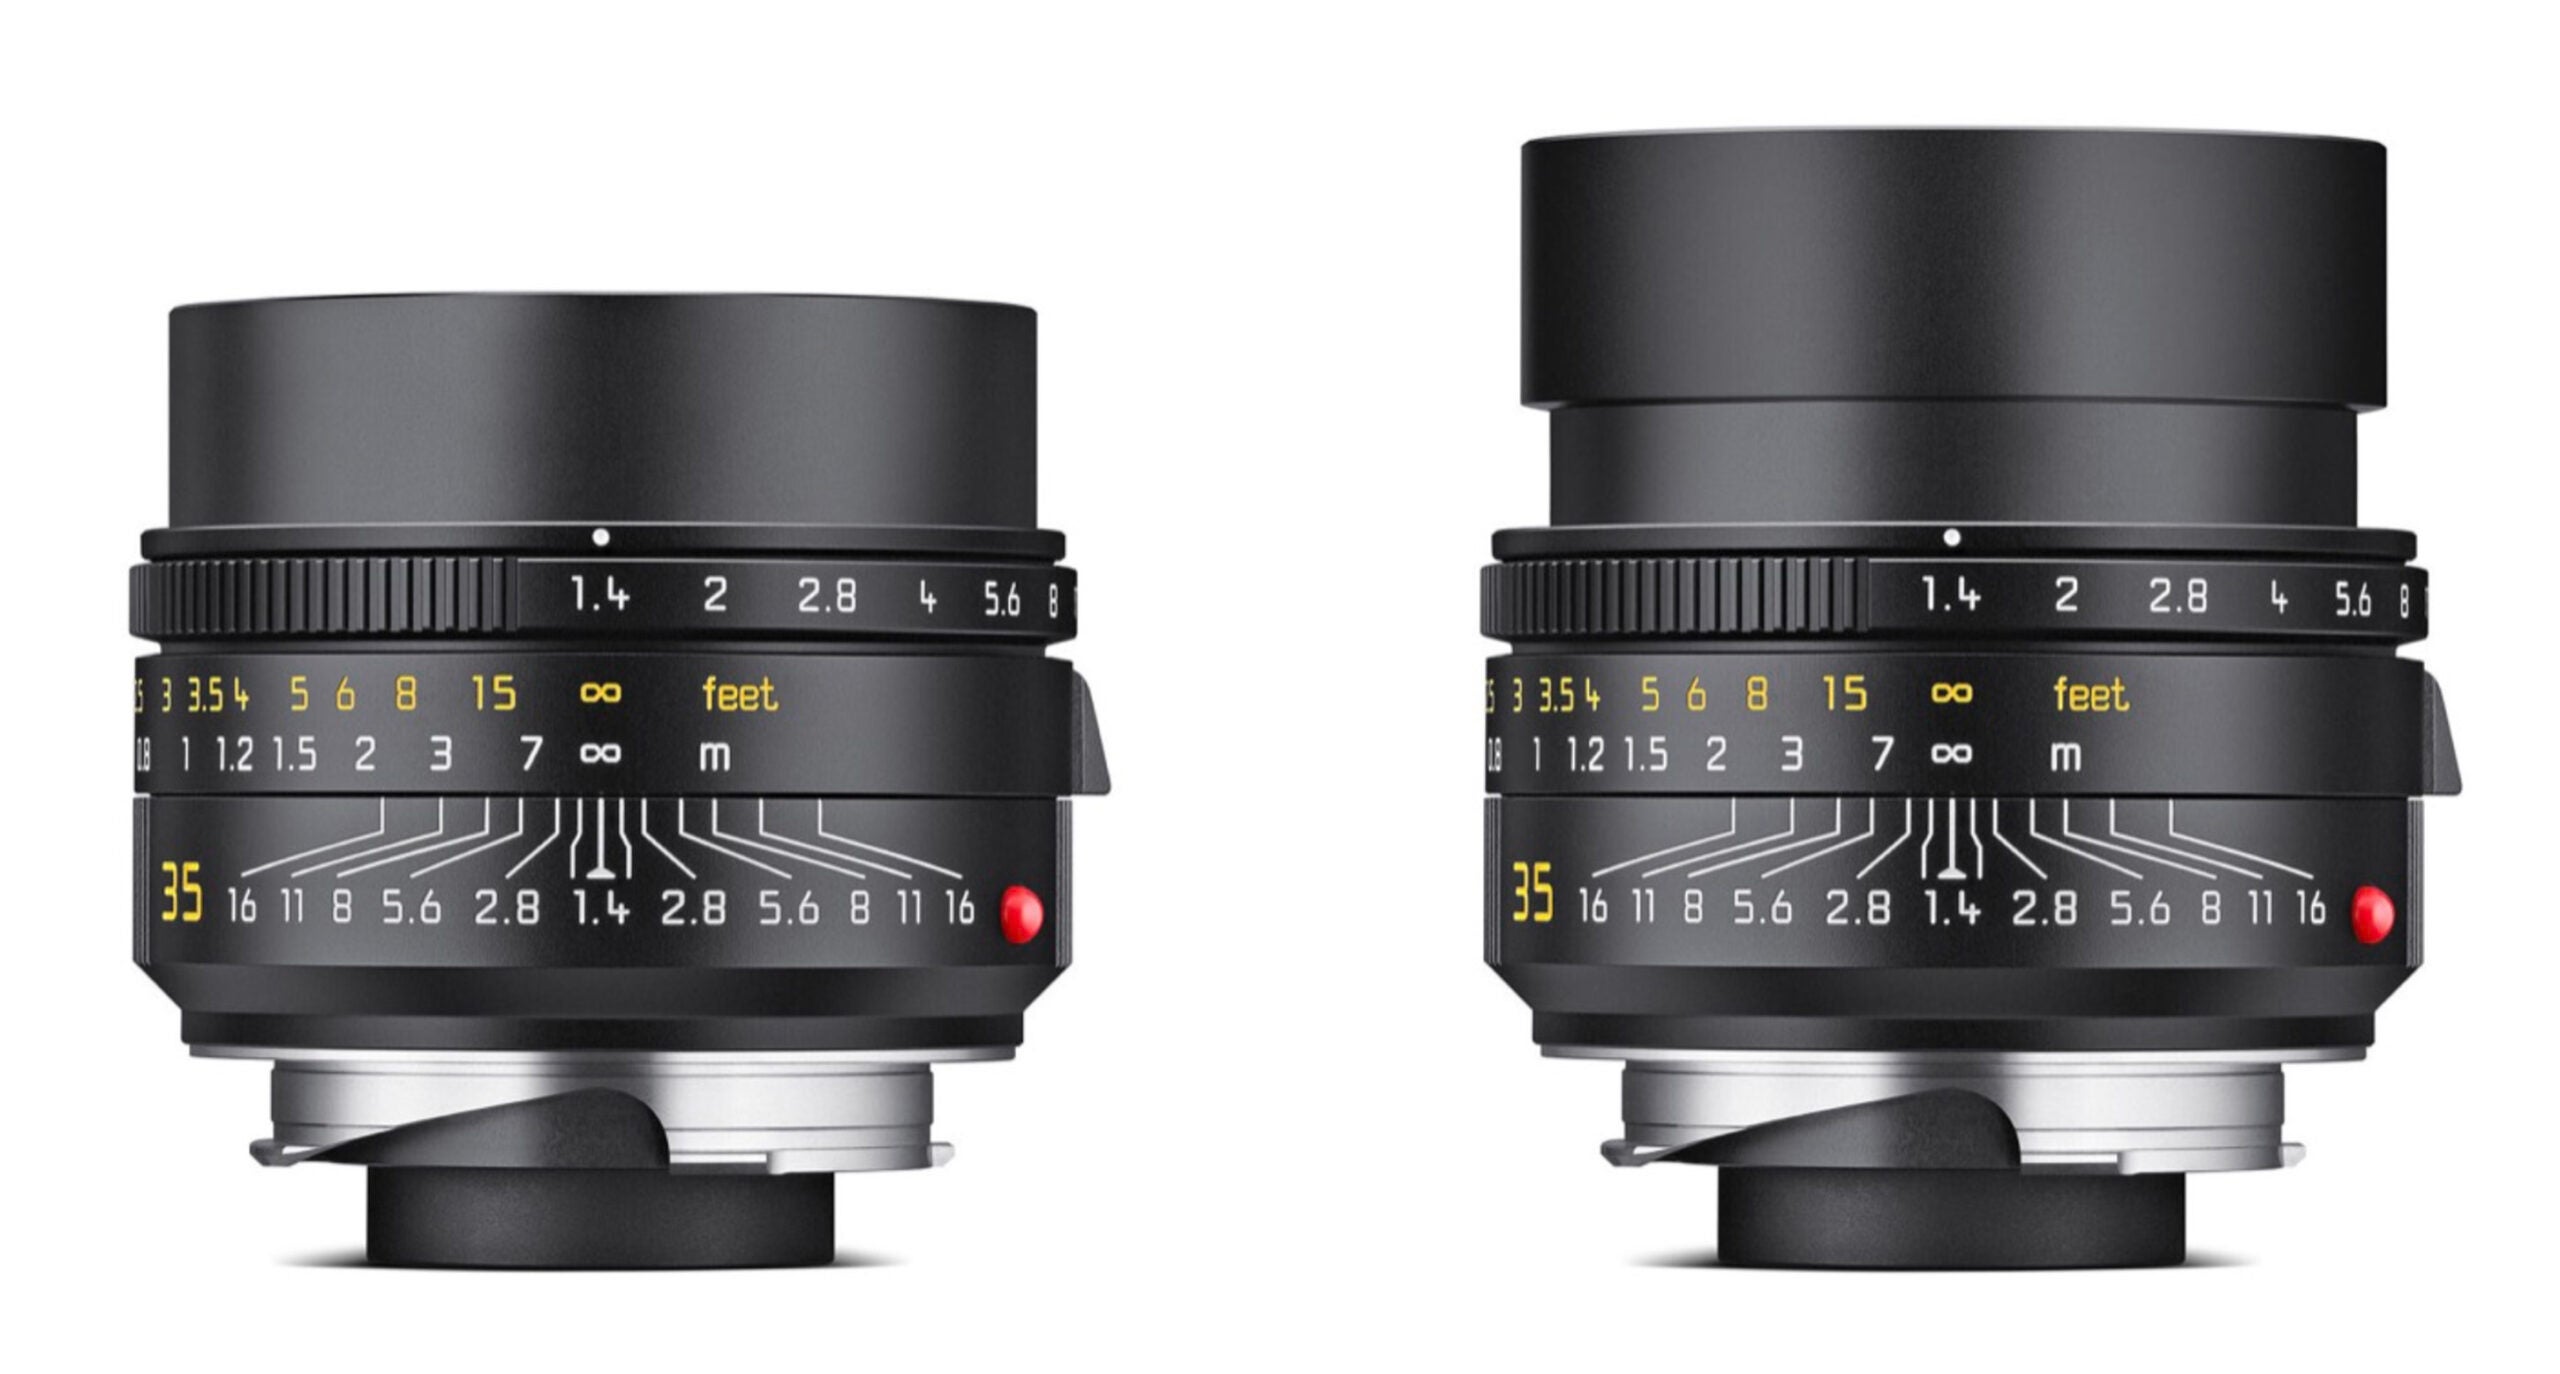 The new Leica Summilux 35mm f/1.4 ASPH.